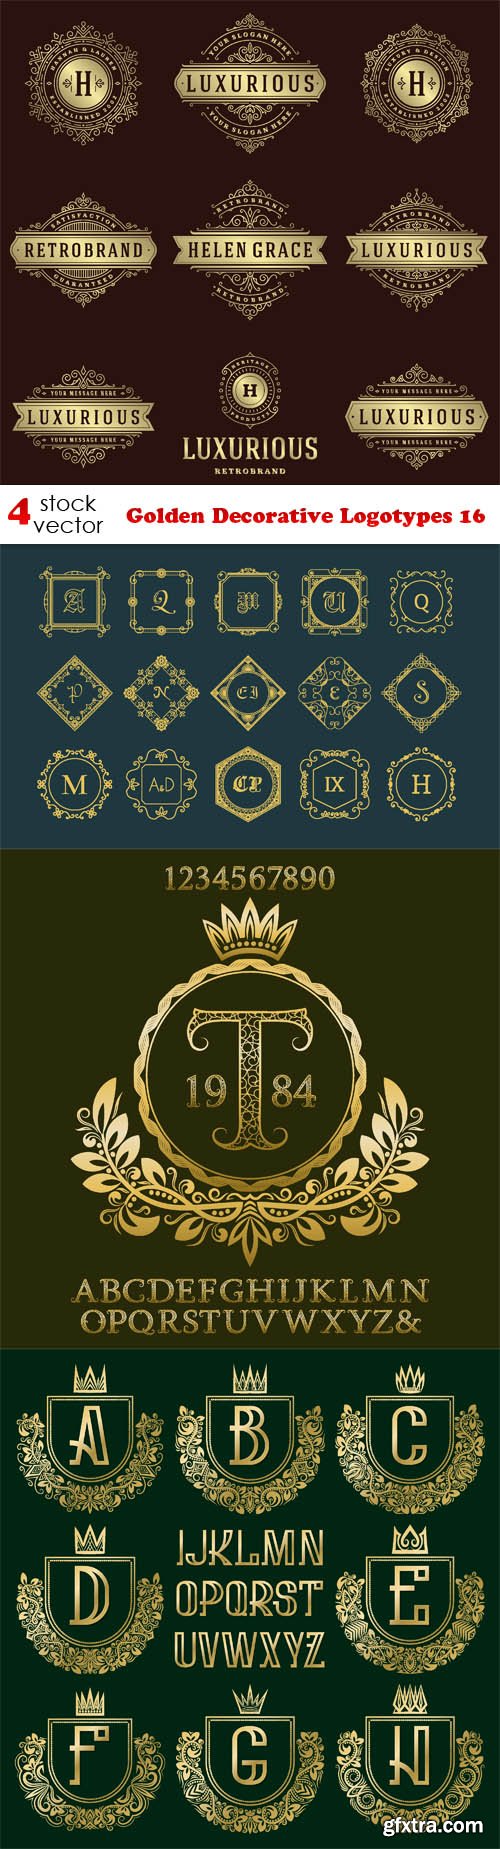 Vectors - Golden Decorative Logotypes 16